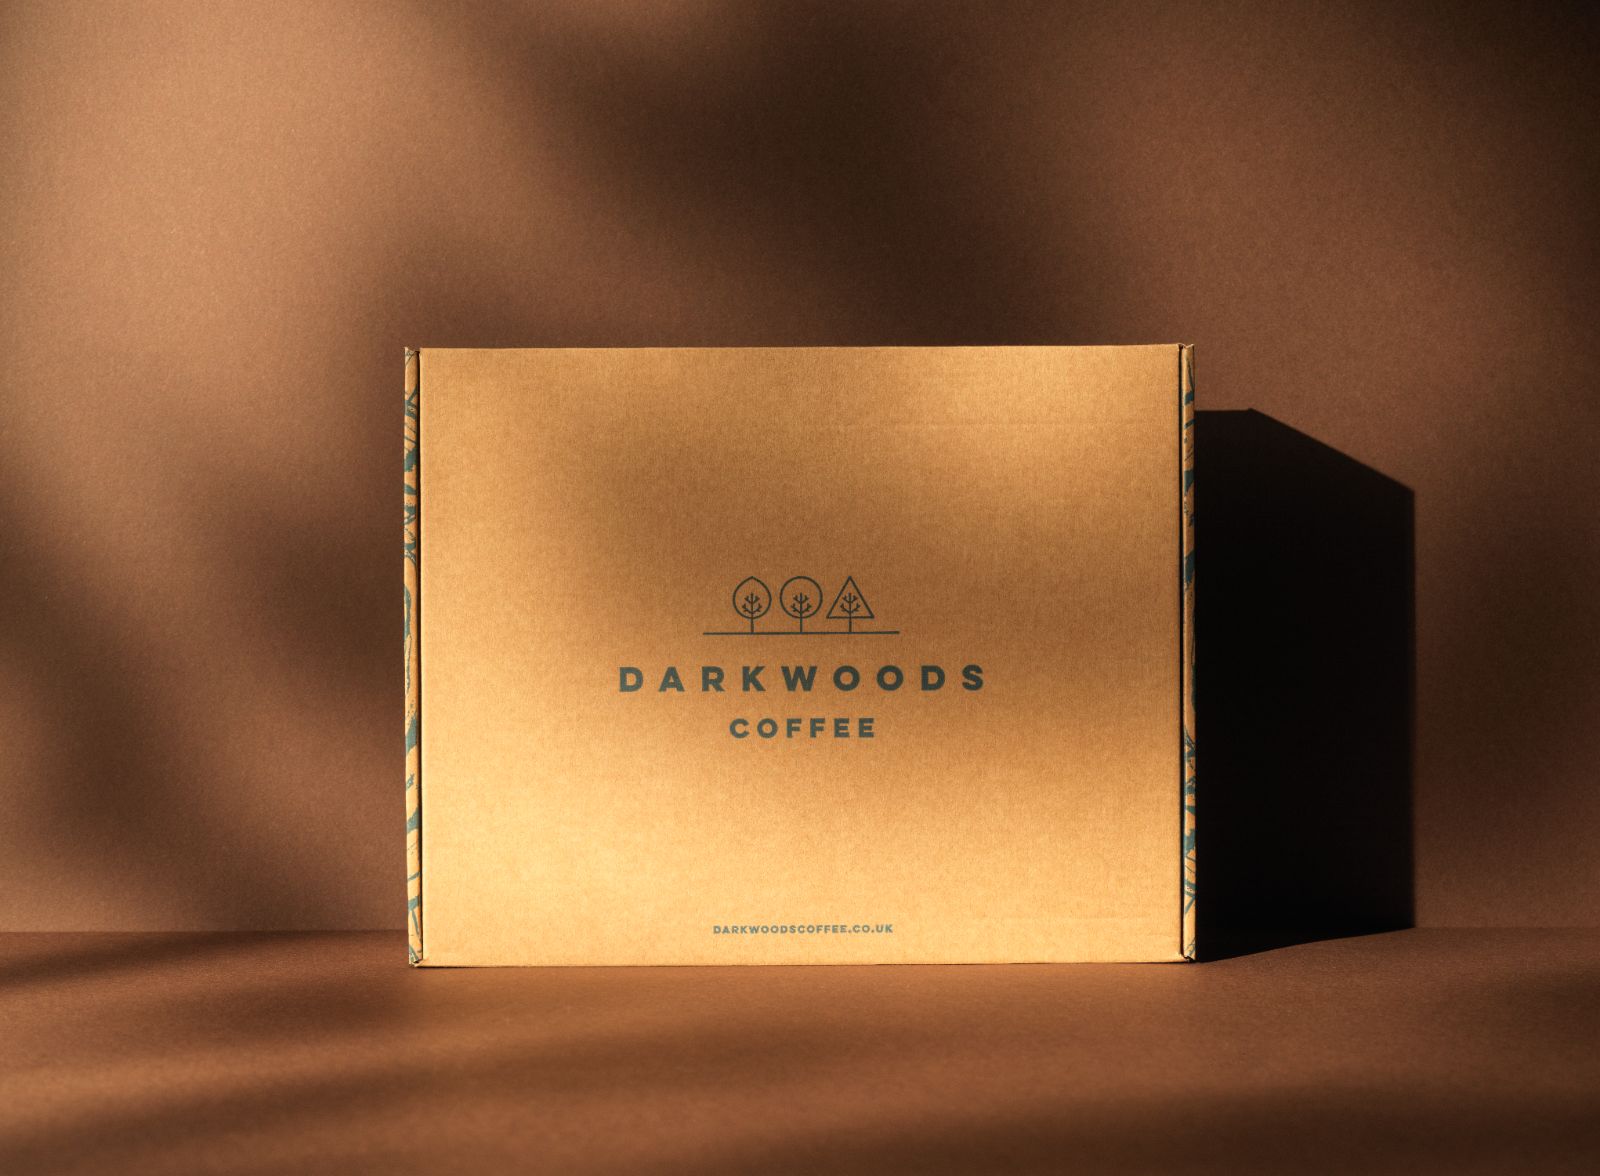 Dark woods coffee packaging design by 93. Brown cardboard mailing box with Dark woods branding and three trees logo design.